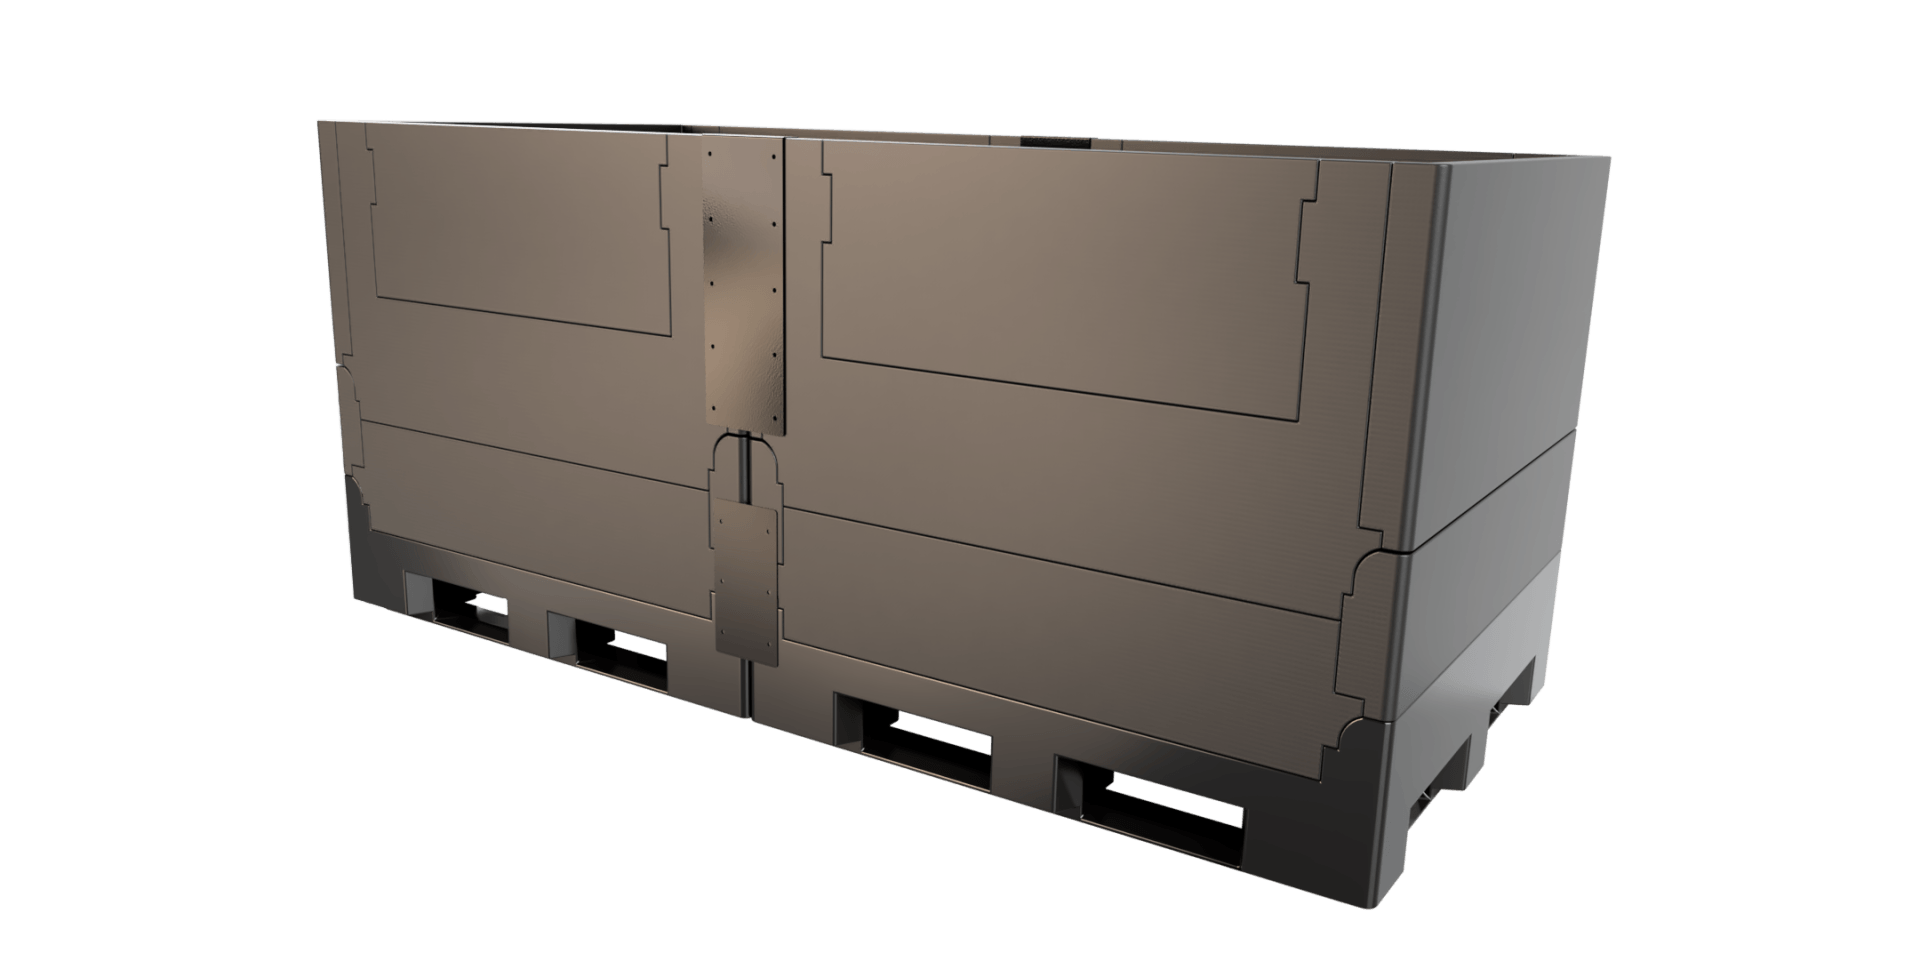 Custom door access for bulk containers